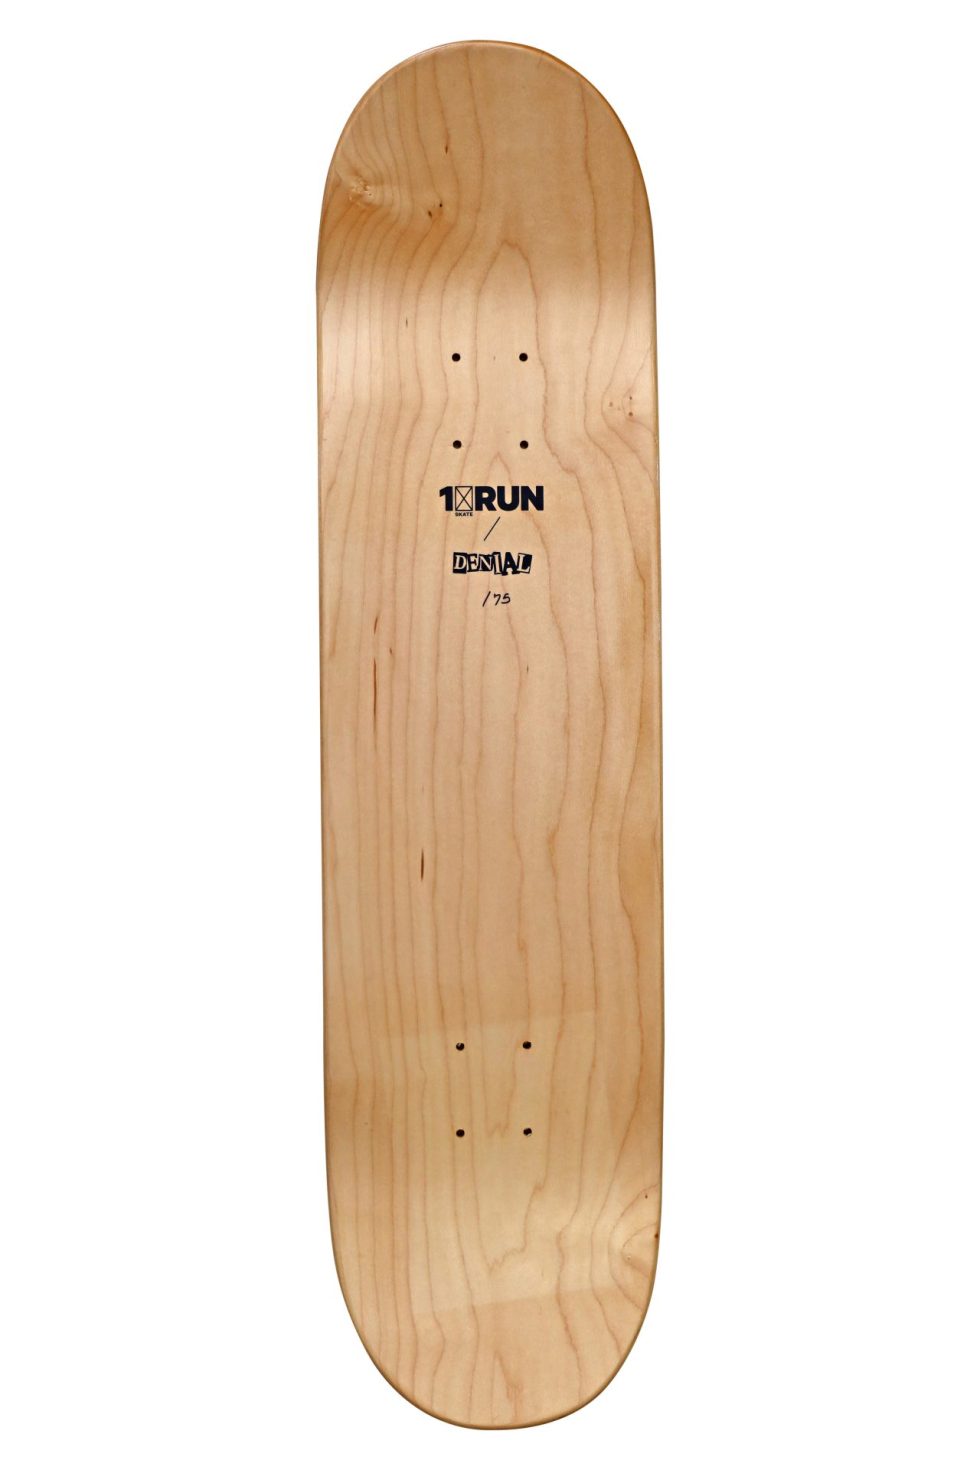 Lot #13934 – DENIAL x 1xRun Alternative Medicine Skateboard Limited Edition Denial Denial Skateboard